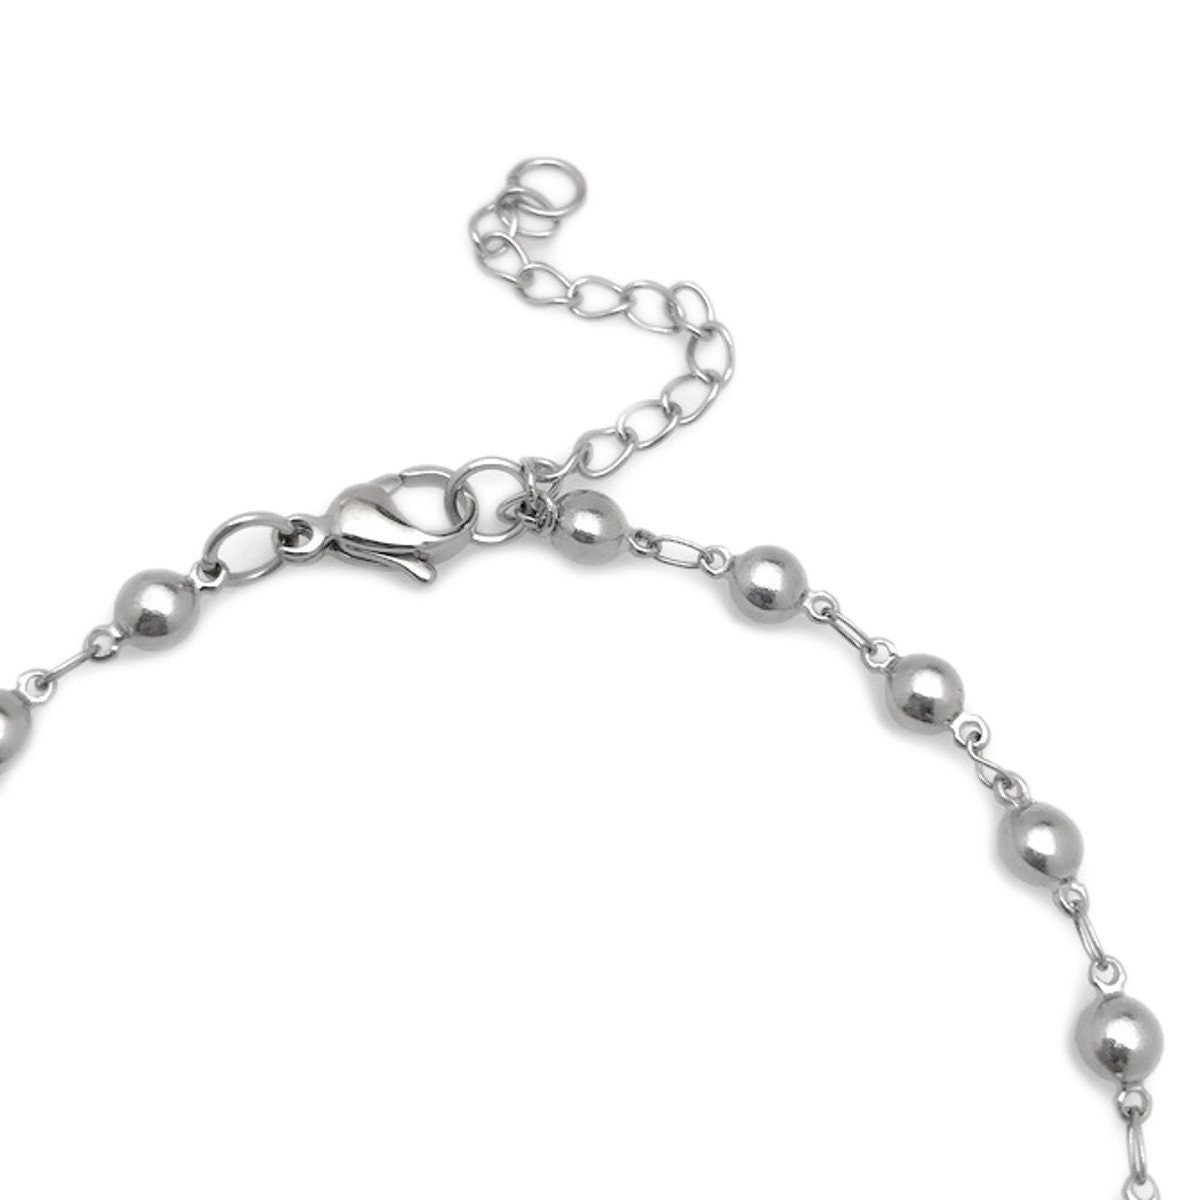 Bead Chain Bracelet, Stainless Steel, Non Tarnish Jewelry, Silver Tone, Adjustable, Layering Bracelet, Sweet 16 Gift, Beaded